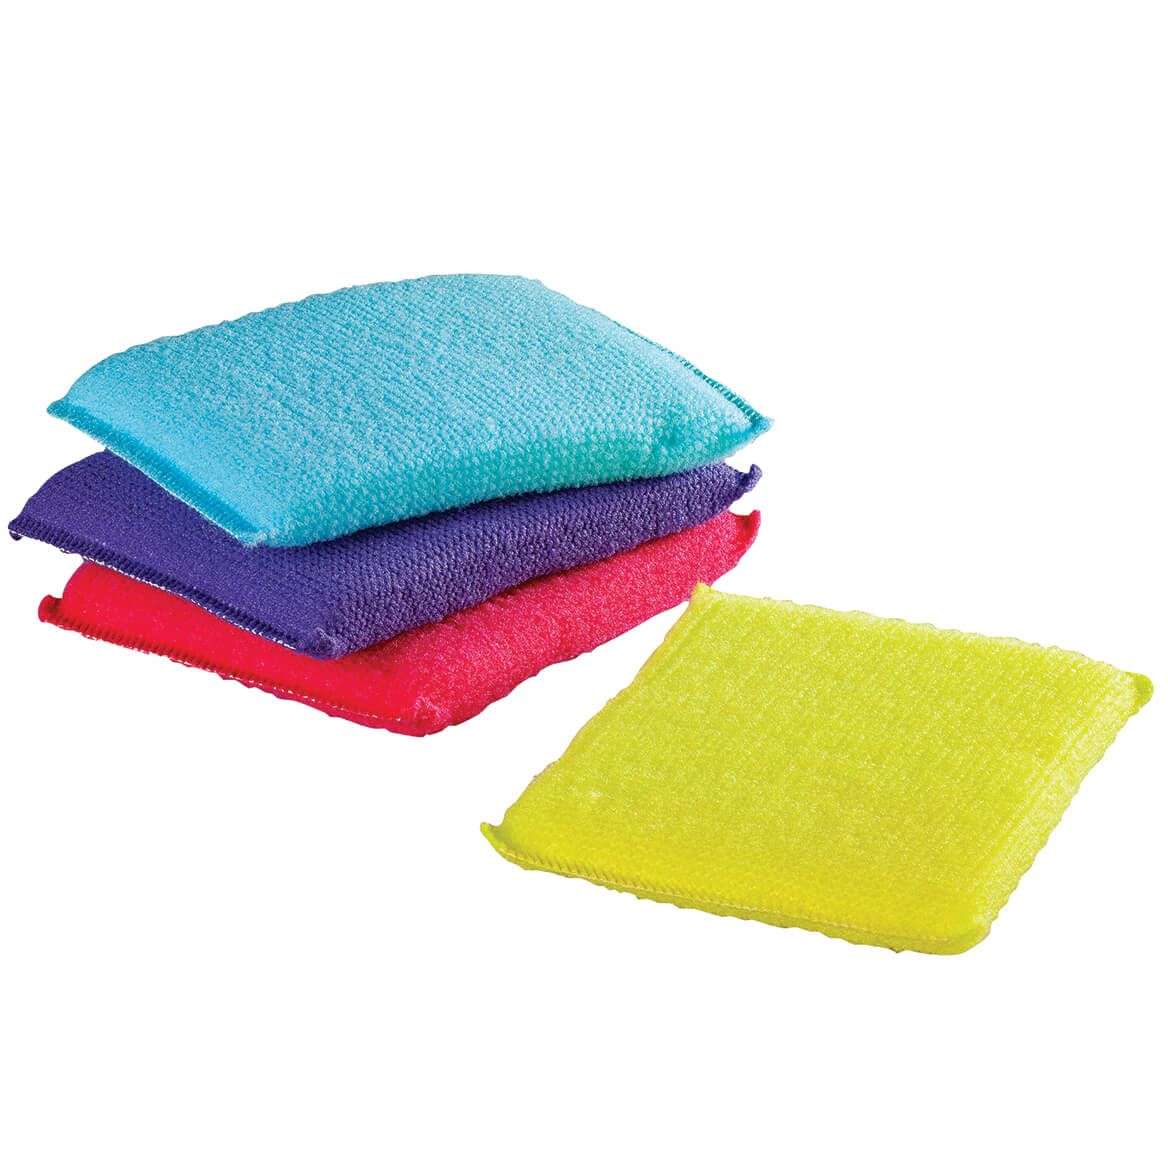 Multi-Purpose Microfiber Cleaning Pads, Set of 4 + '-' + 372858